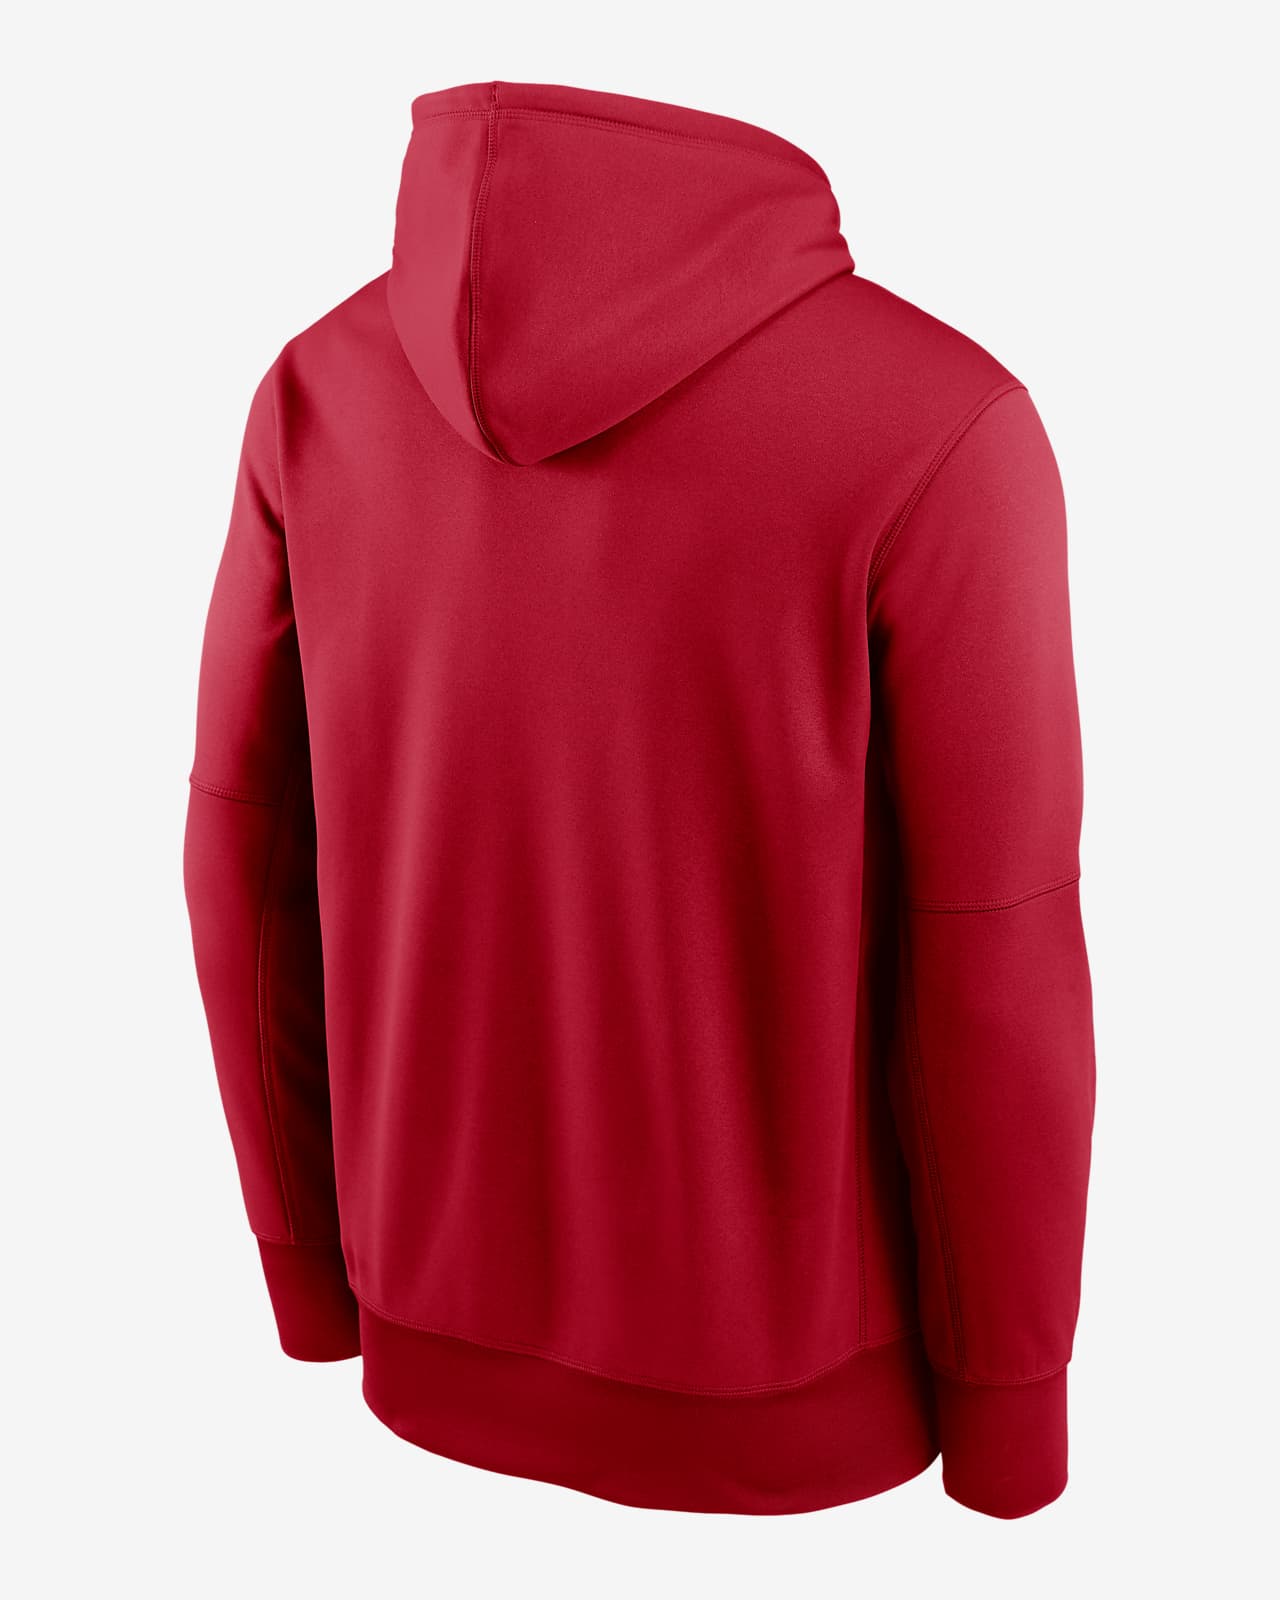 Nike Sweater Men's Large Camo Brown Green Full Zip Hoodie Sweatshirt  Red Tag